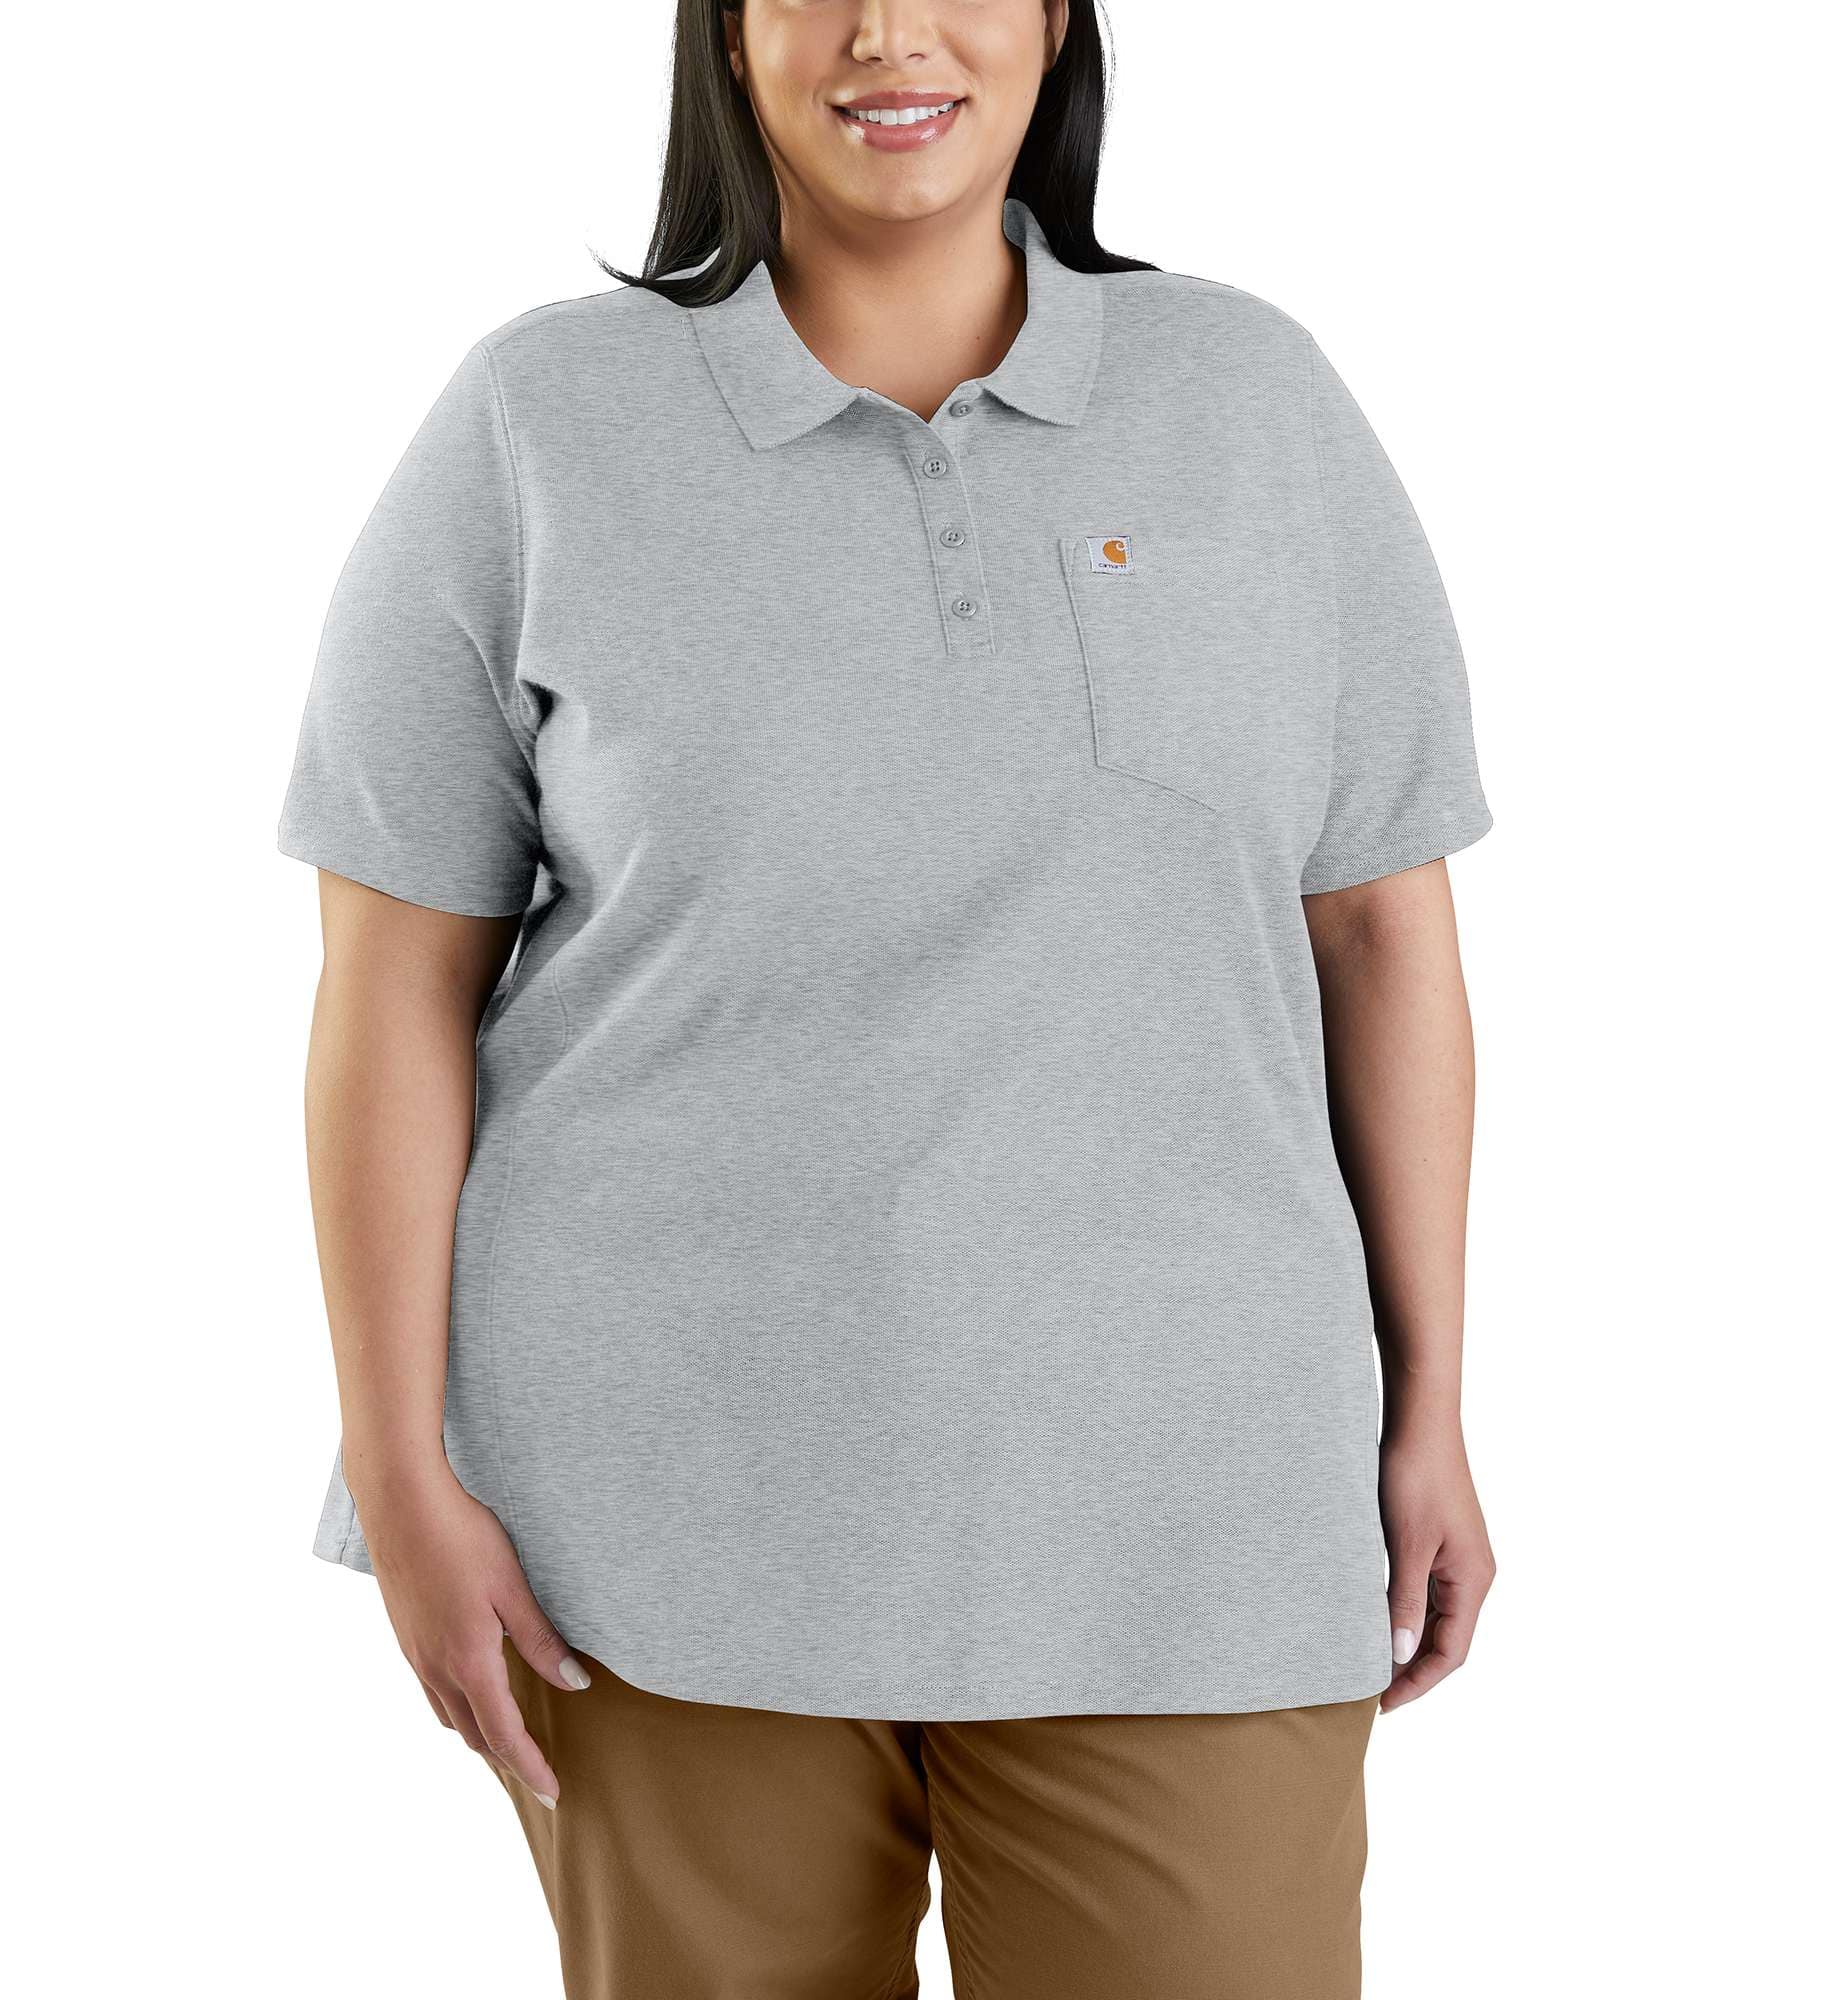 Women's Uniform Shirts | Carhartt Company Gear